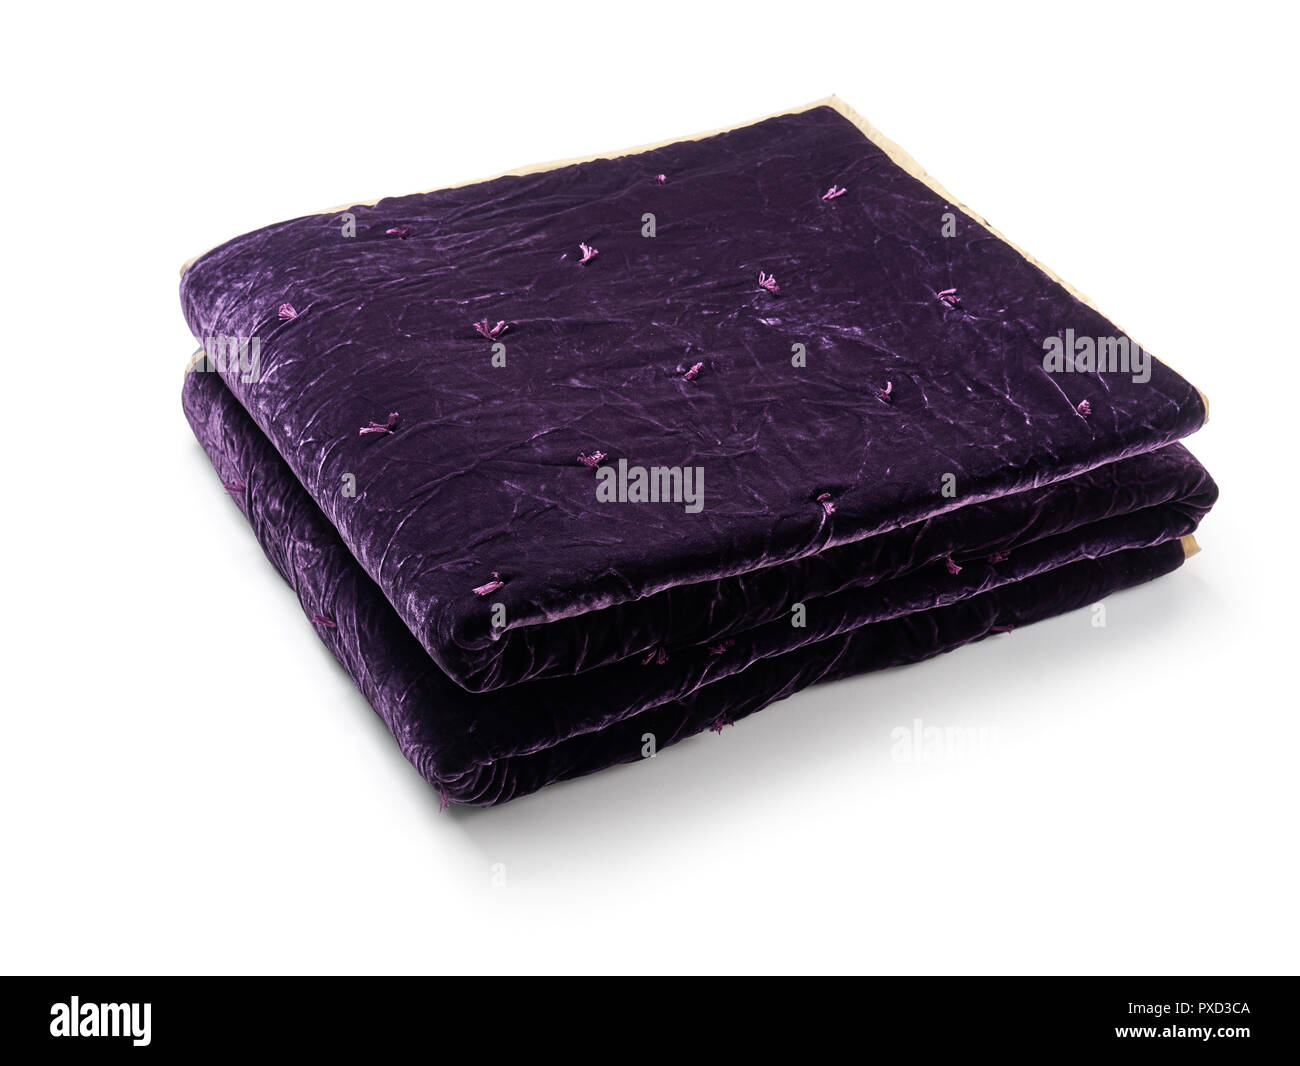 Purple blanket made of velor fabric, neatly folded, isolated on white background Stock Photo